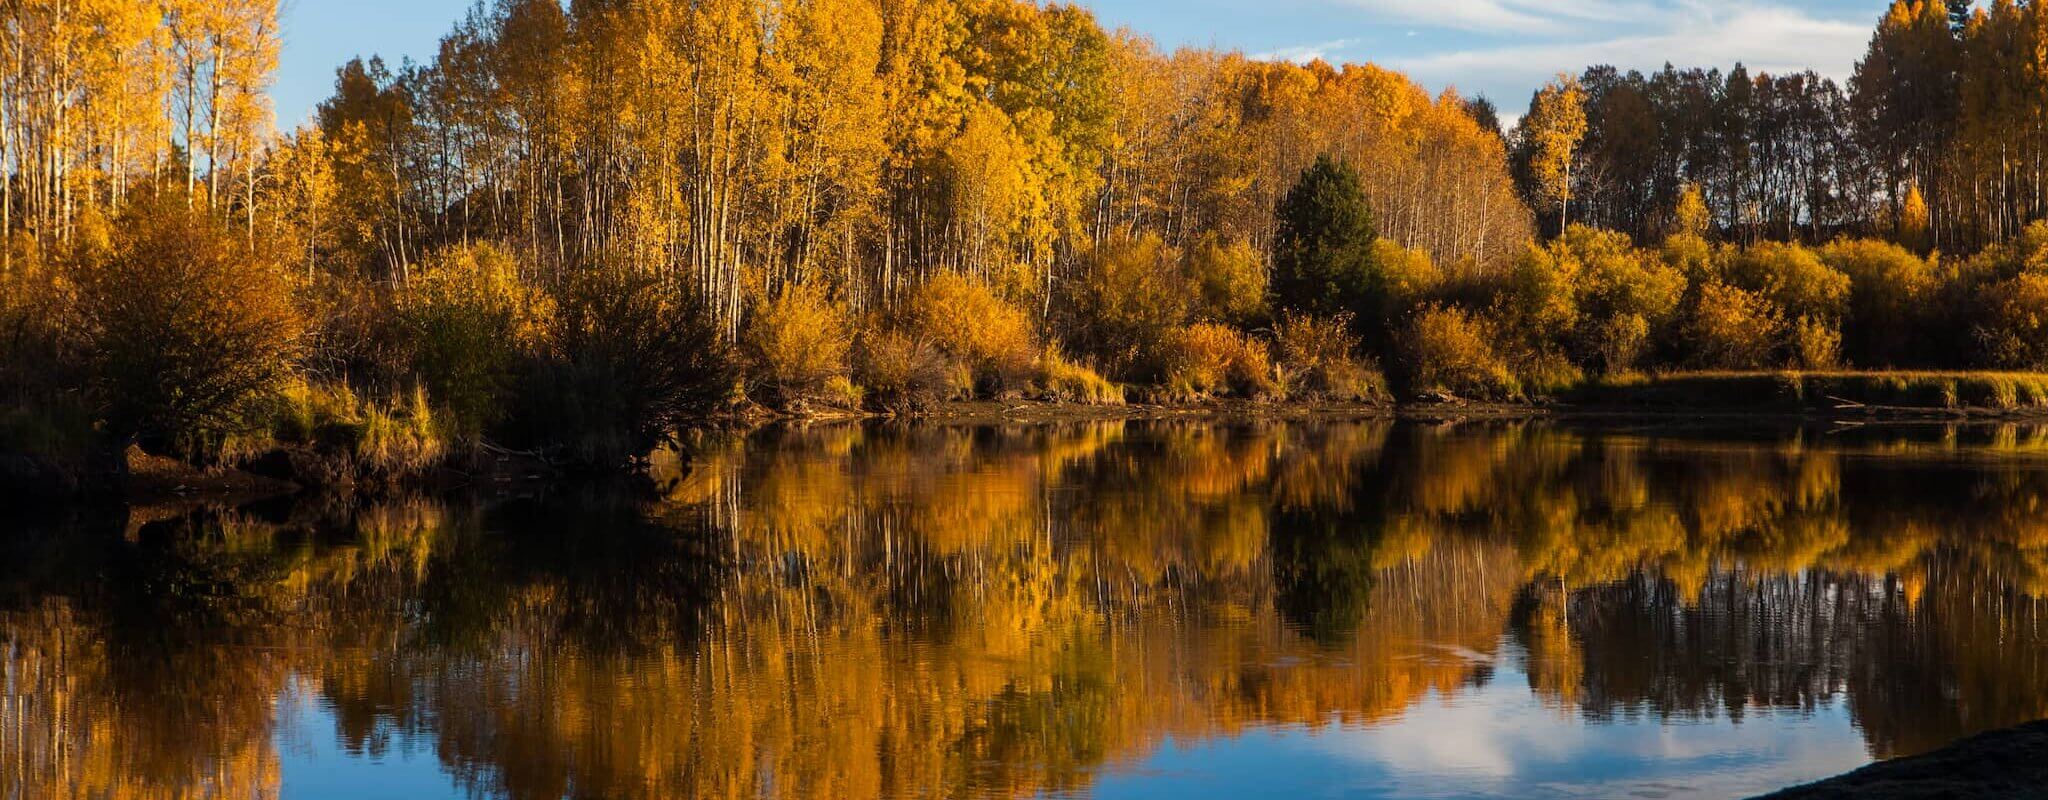 Fall-Color-on-the-Deschutes-River